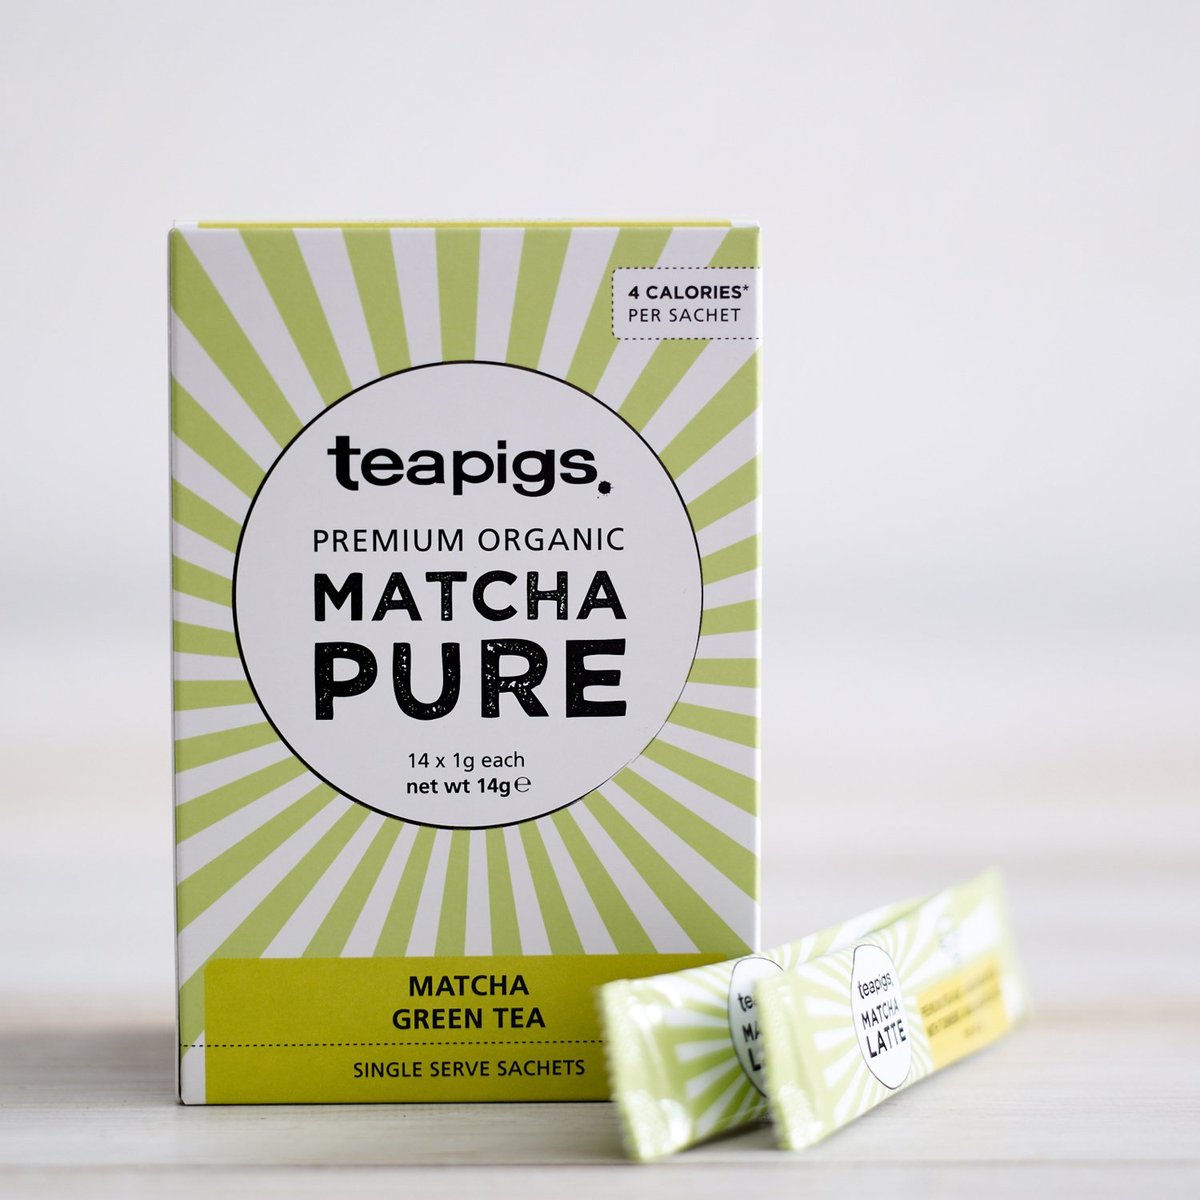 Premium Matcha Green Tea